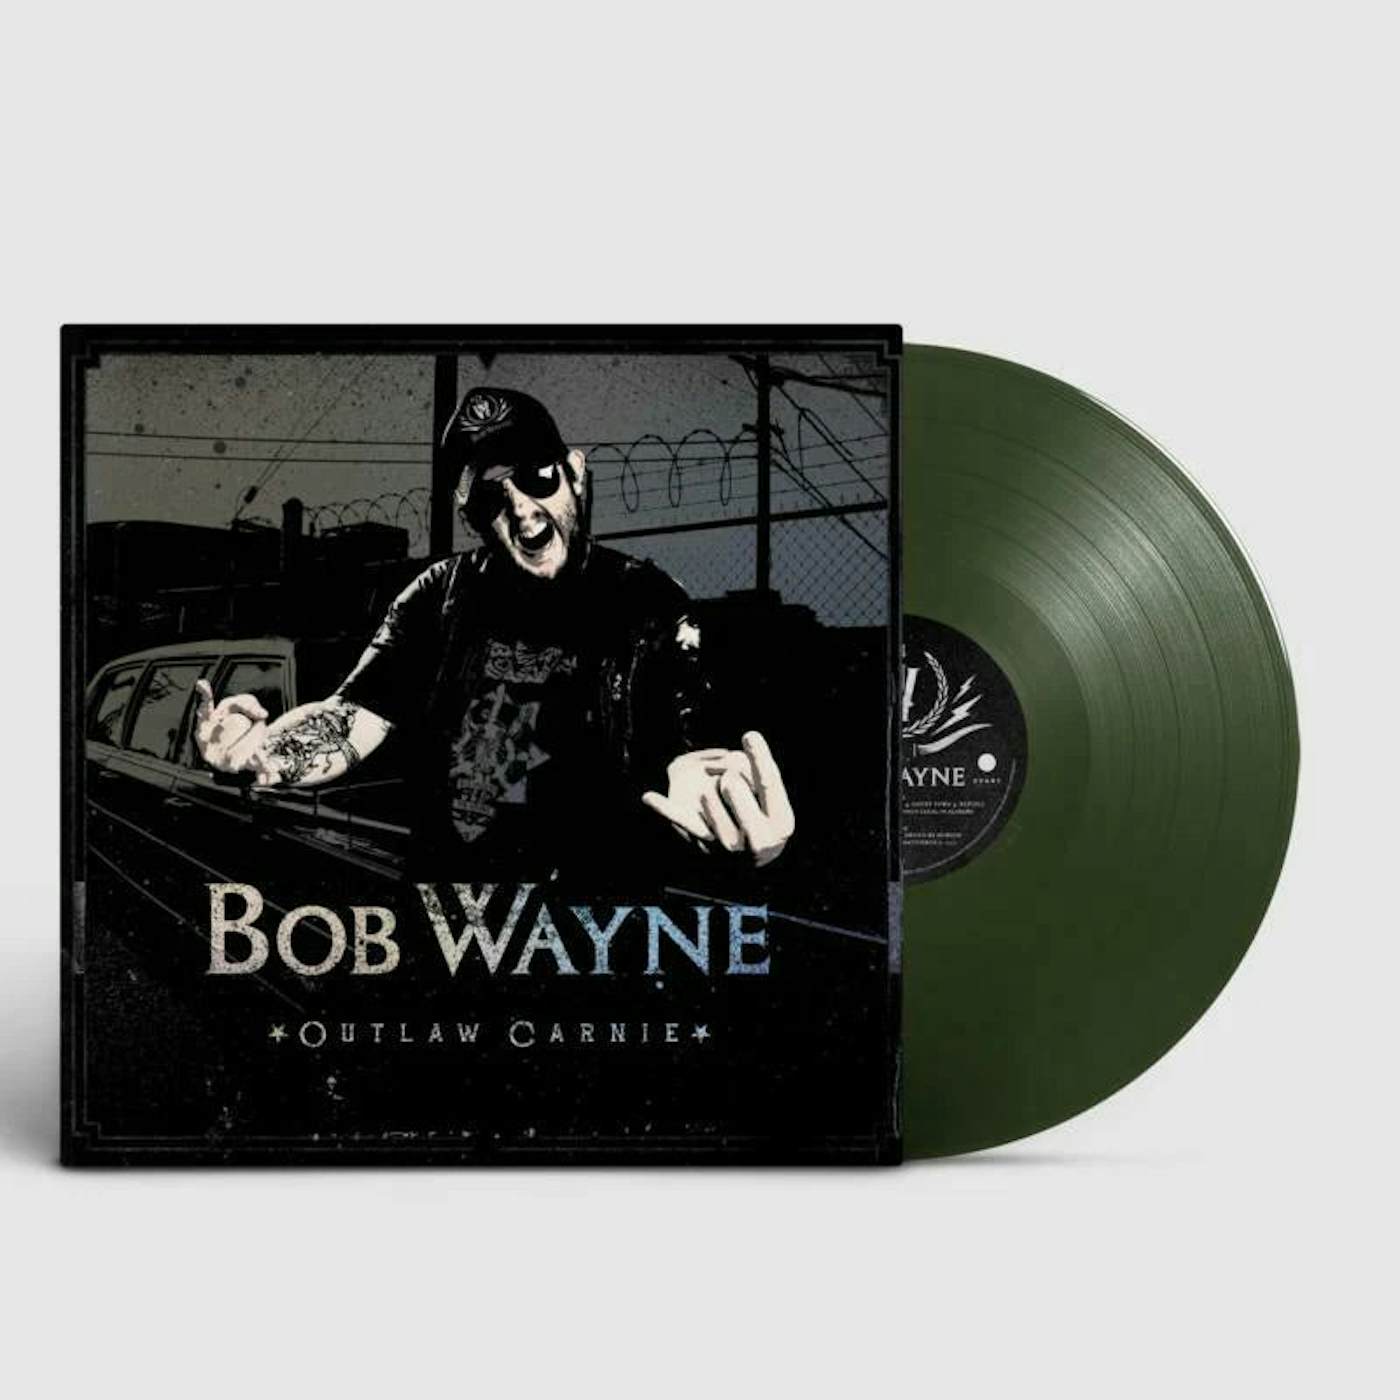 Bob Wayne LP - Outlaw Carnie (Vinyl)